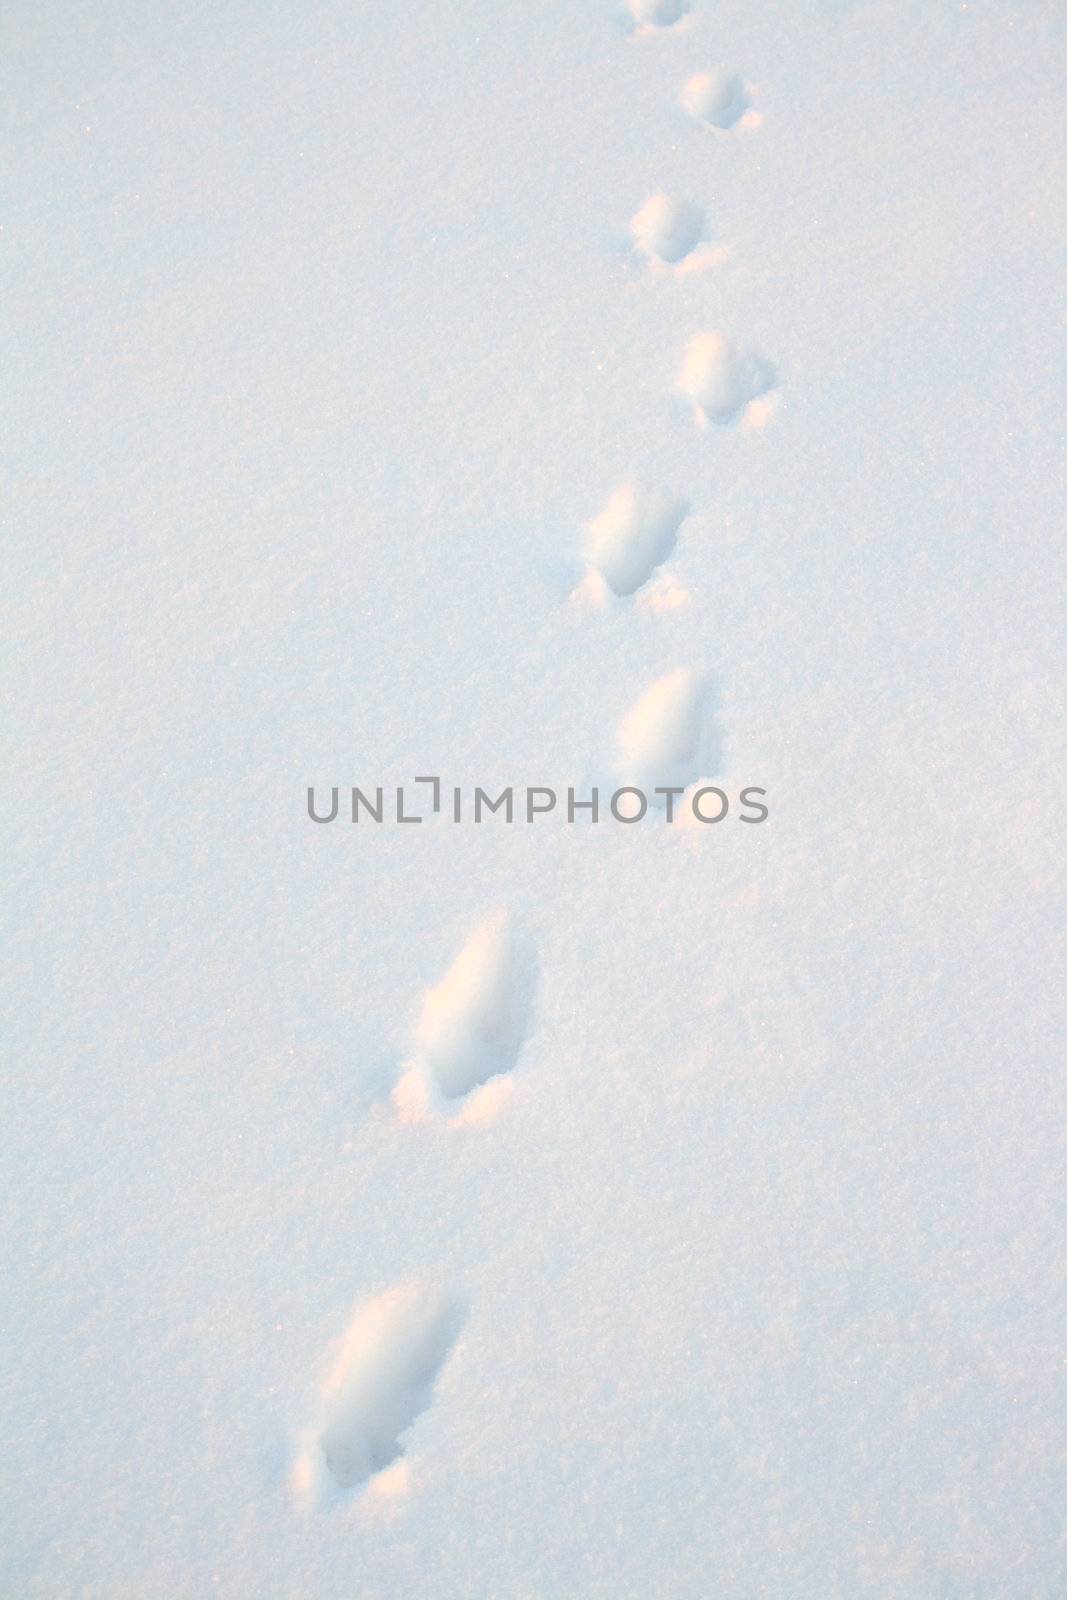 animal tracks on snow by Mikko